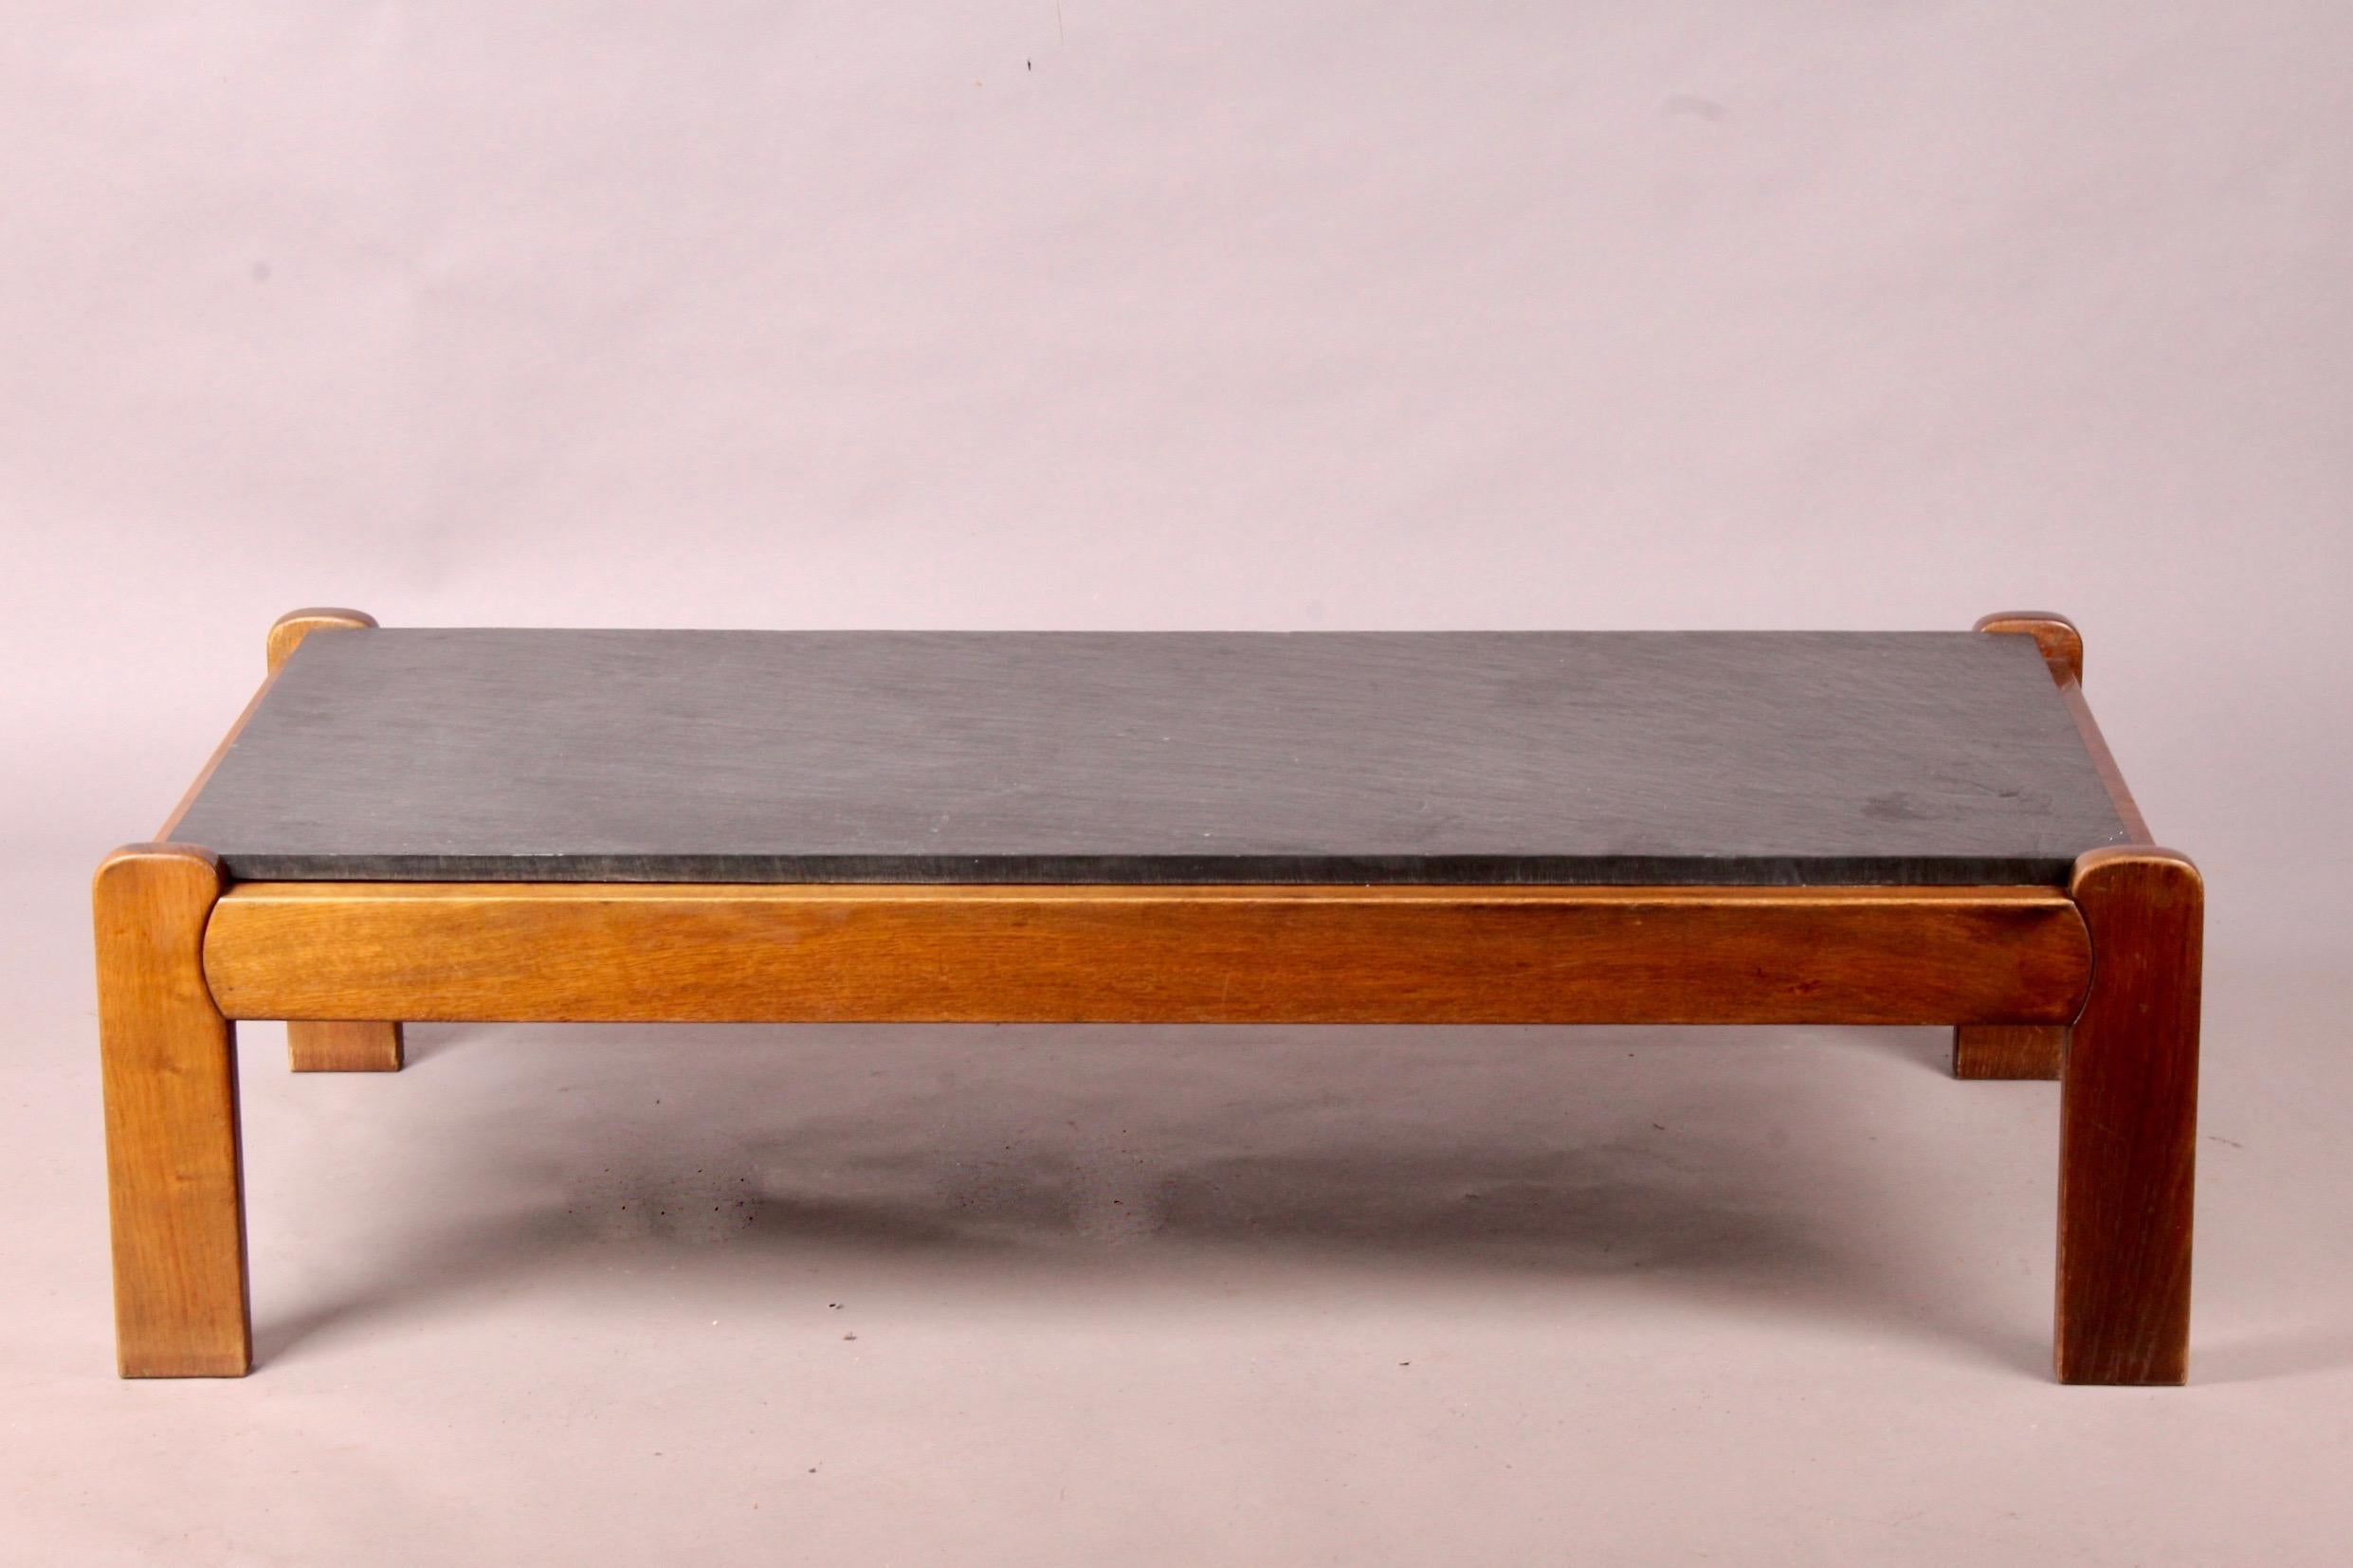 Slate and wood rectangular coffee table.